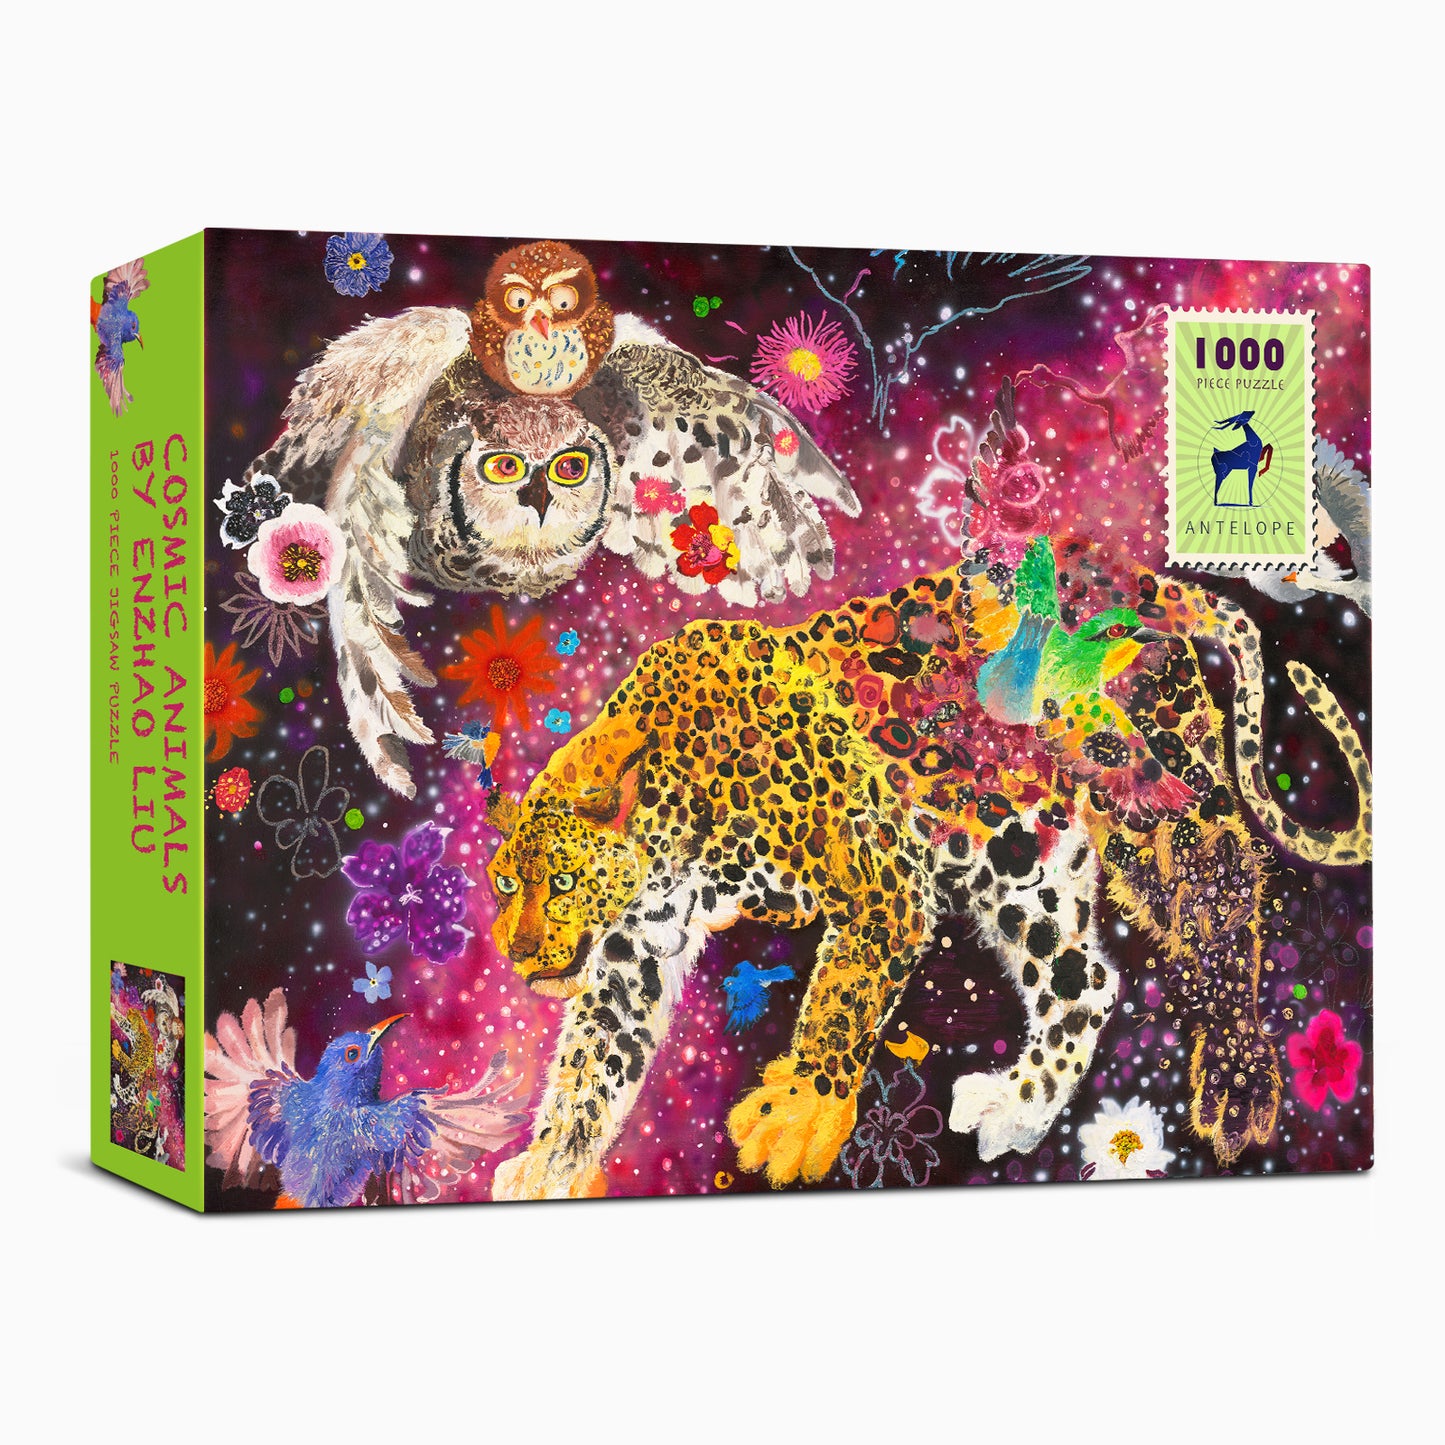 Cosmic Animals by Enzhao Liu 1000 Piece Jigsaw Puzzle